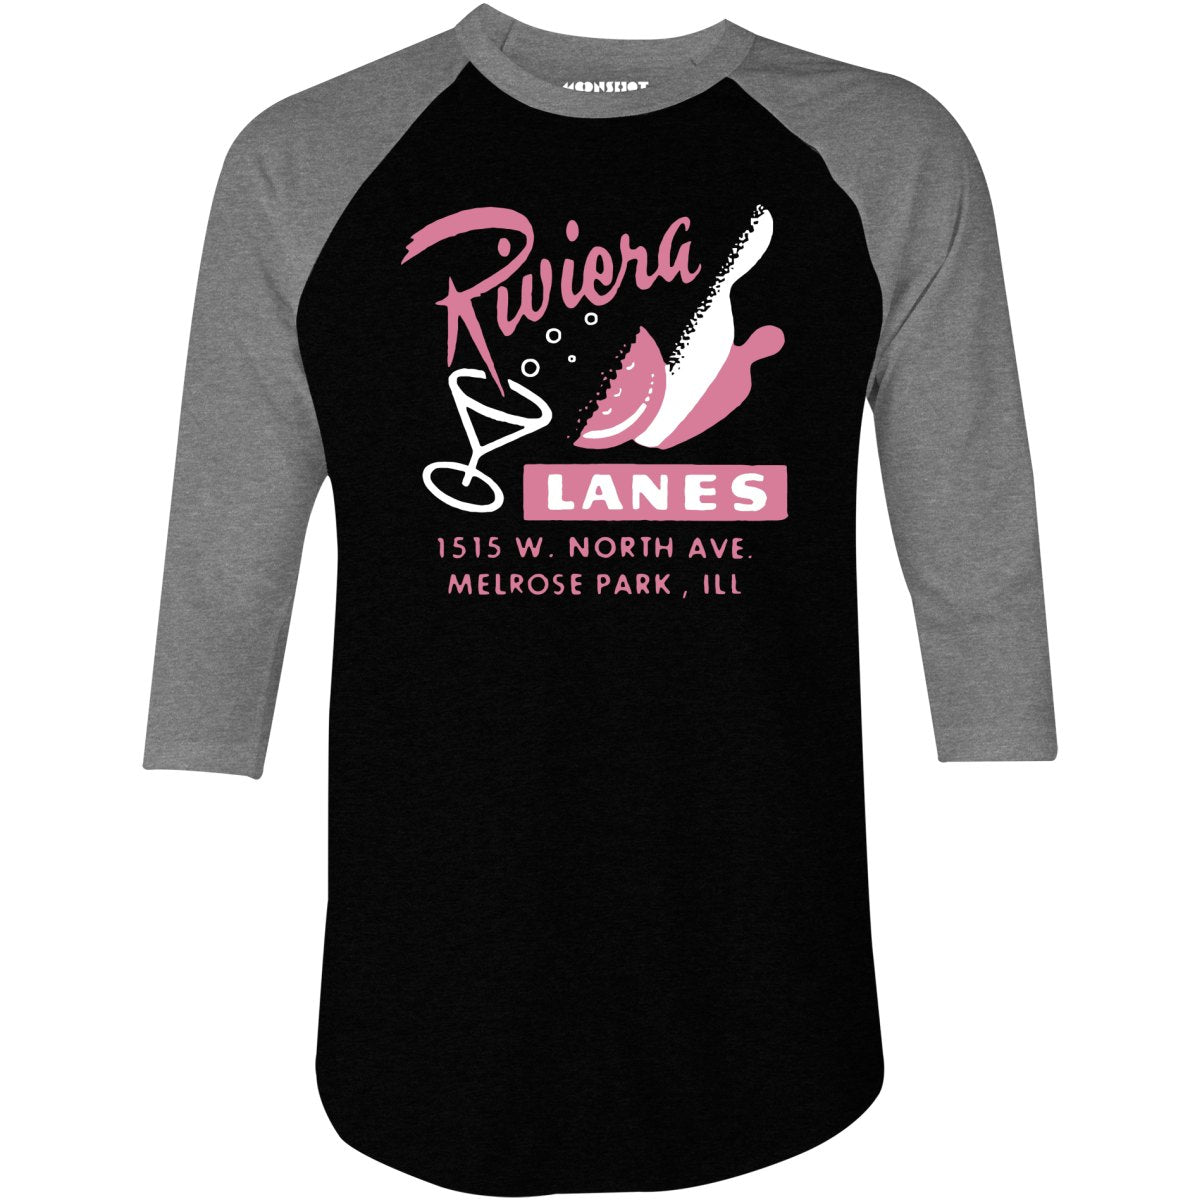 Riviera Lanes - Melrose Park, IL - Vintage Bowling Alley - 3/4 Sleeve Raglan T-Shirt